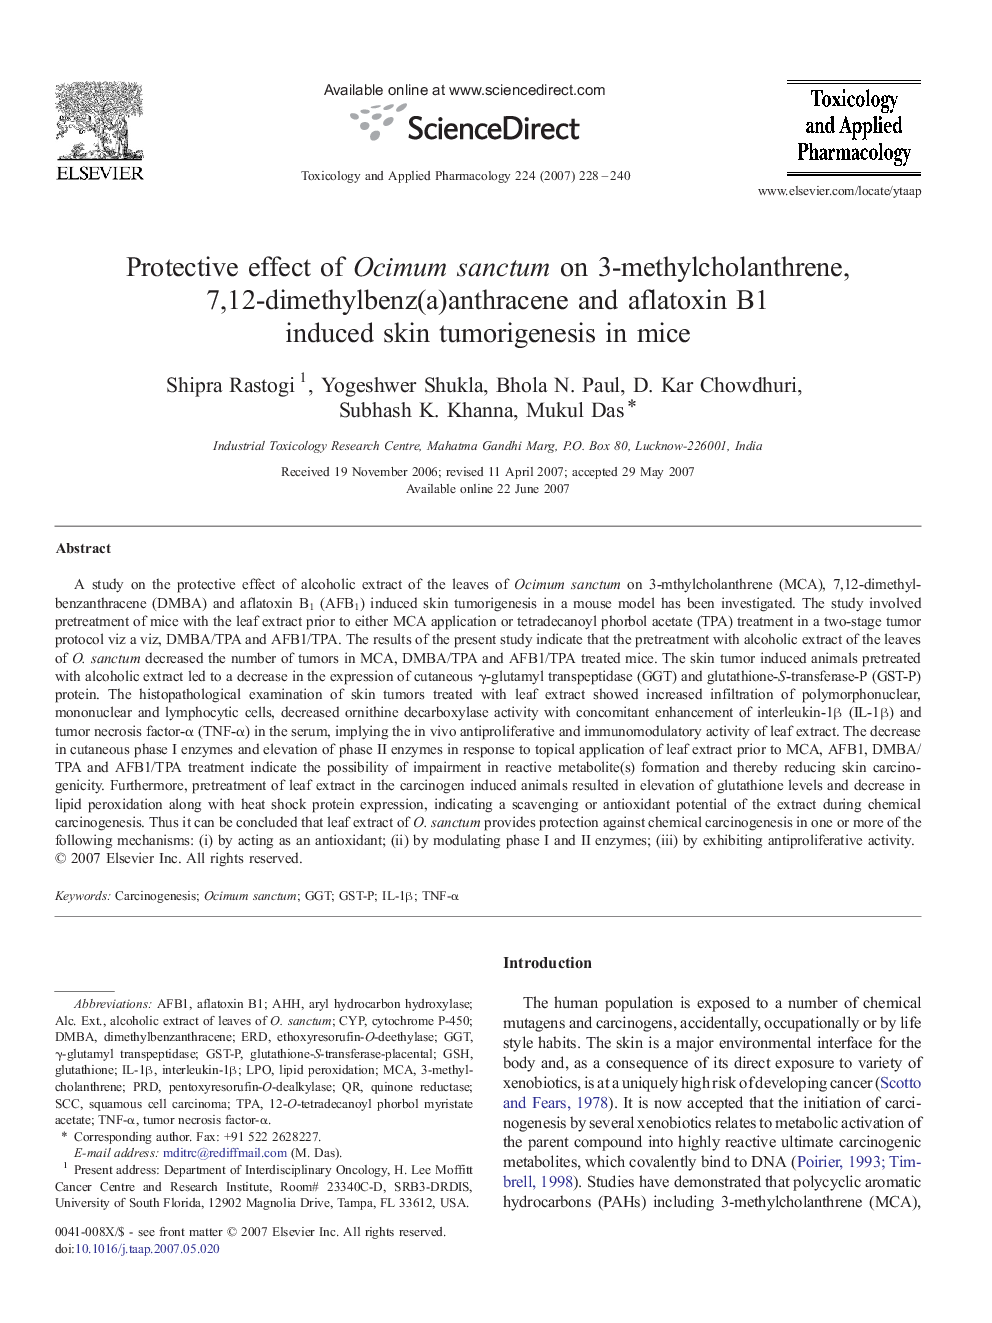 Protective effect of Ocimum sanctum on 3-methylcholanthrene, 7,12-dimethylbenz(a)anthracene and aflatoxin B1 induced skin tumorigenesis in mice